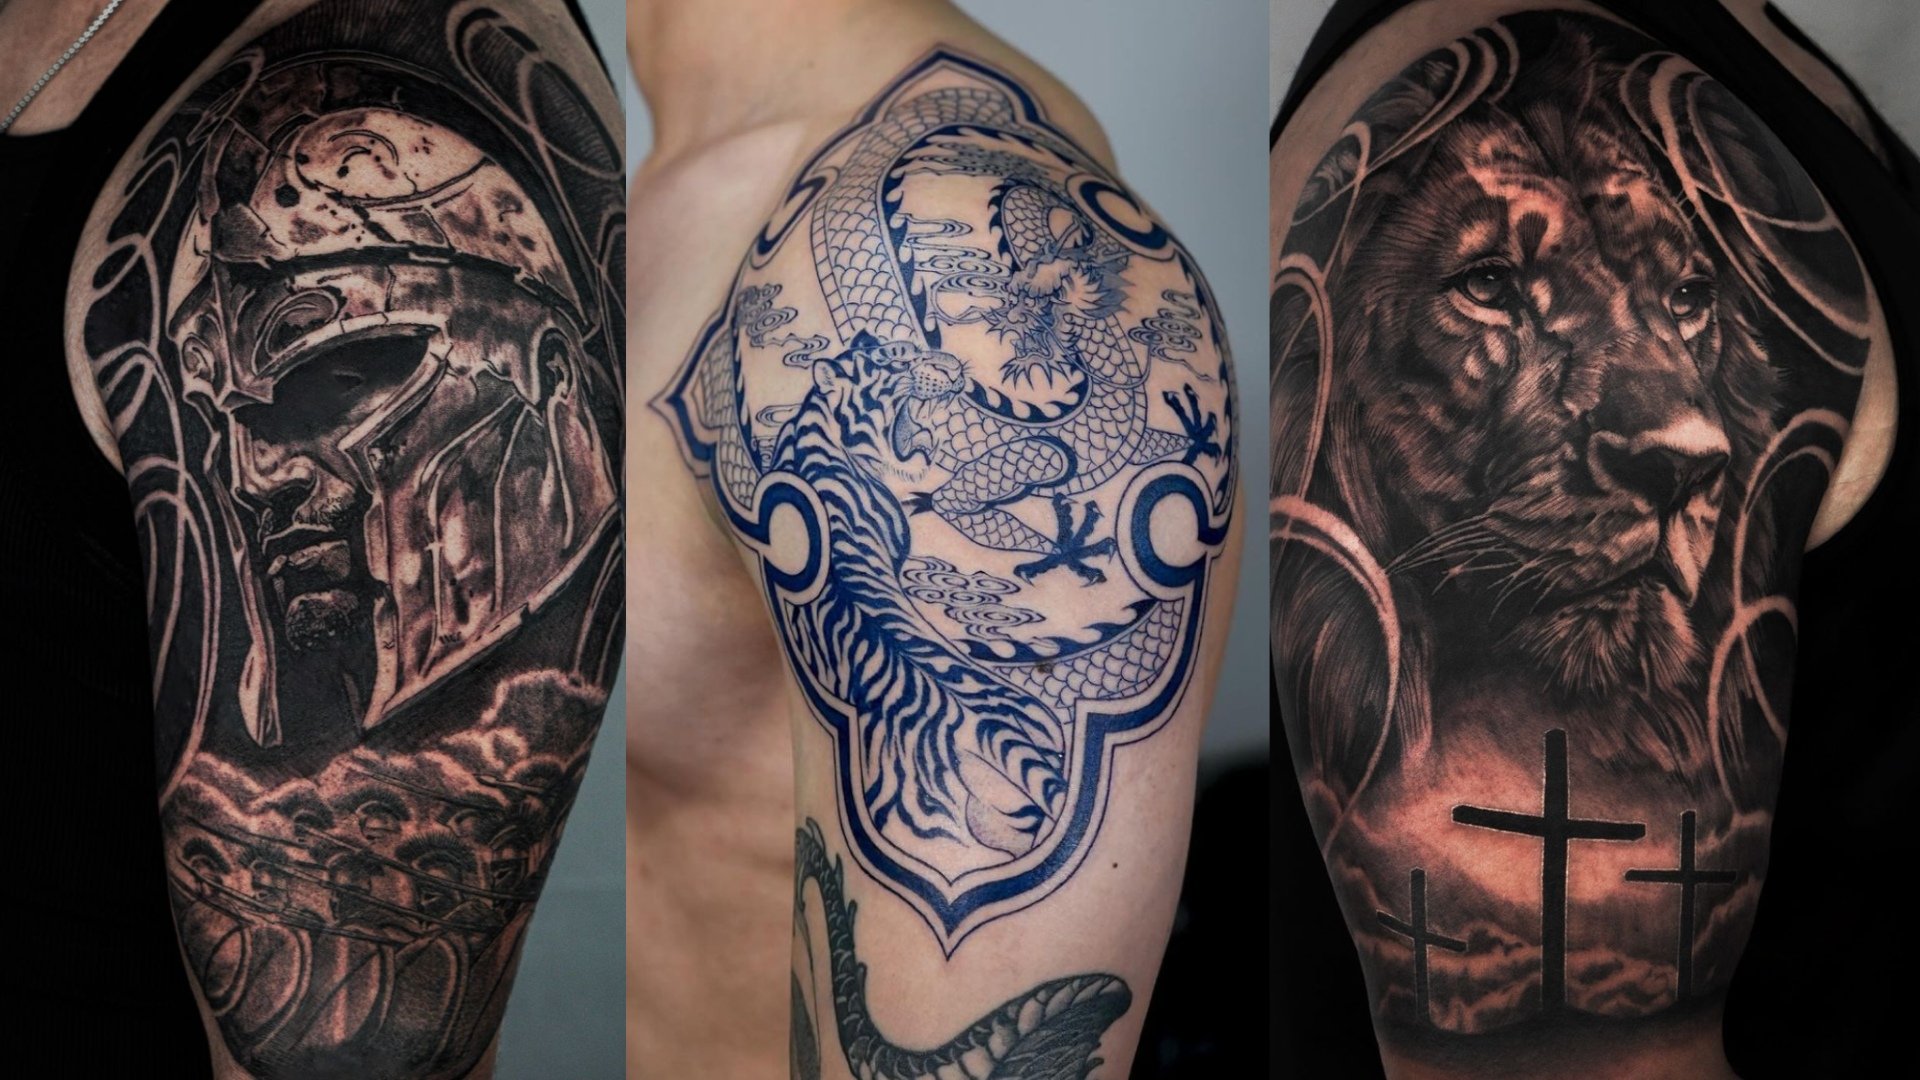 Shoulder Tattoo - Best Tattoo Ideas Gallery